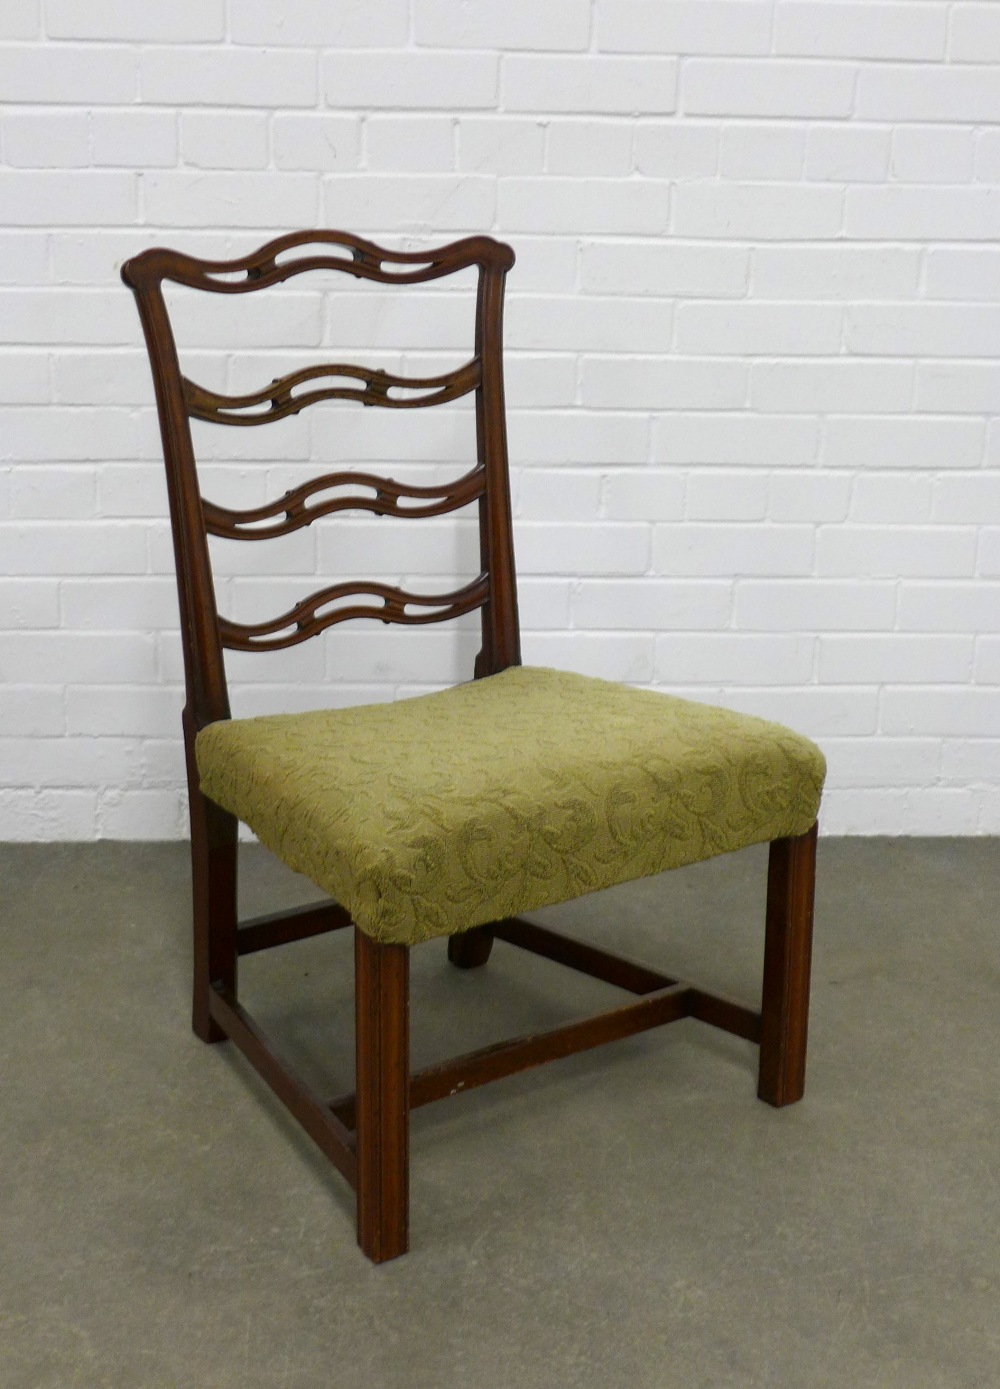 19th century mahogany ladderback side chair, 55 x 87 x 48cm.